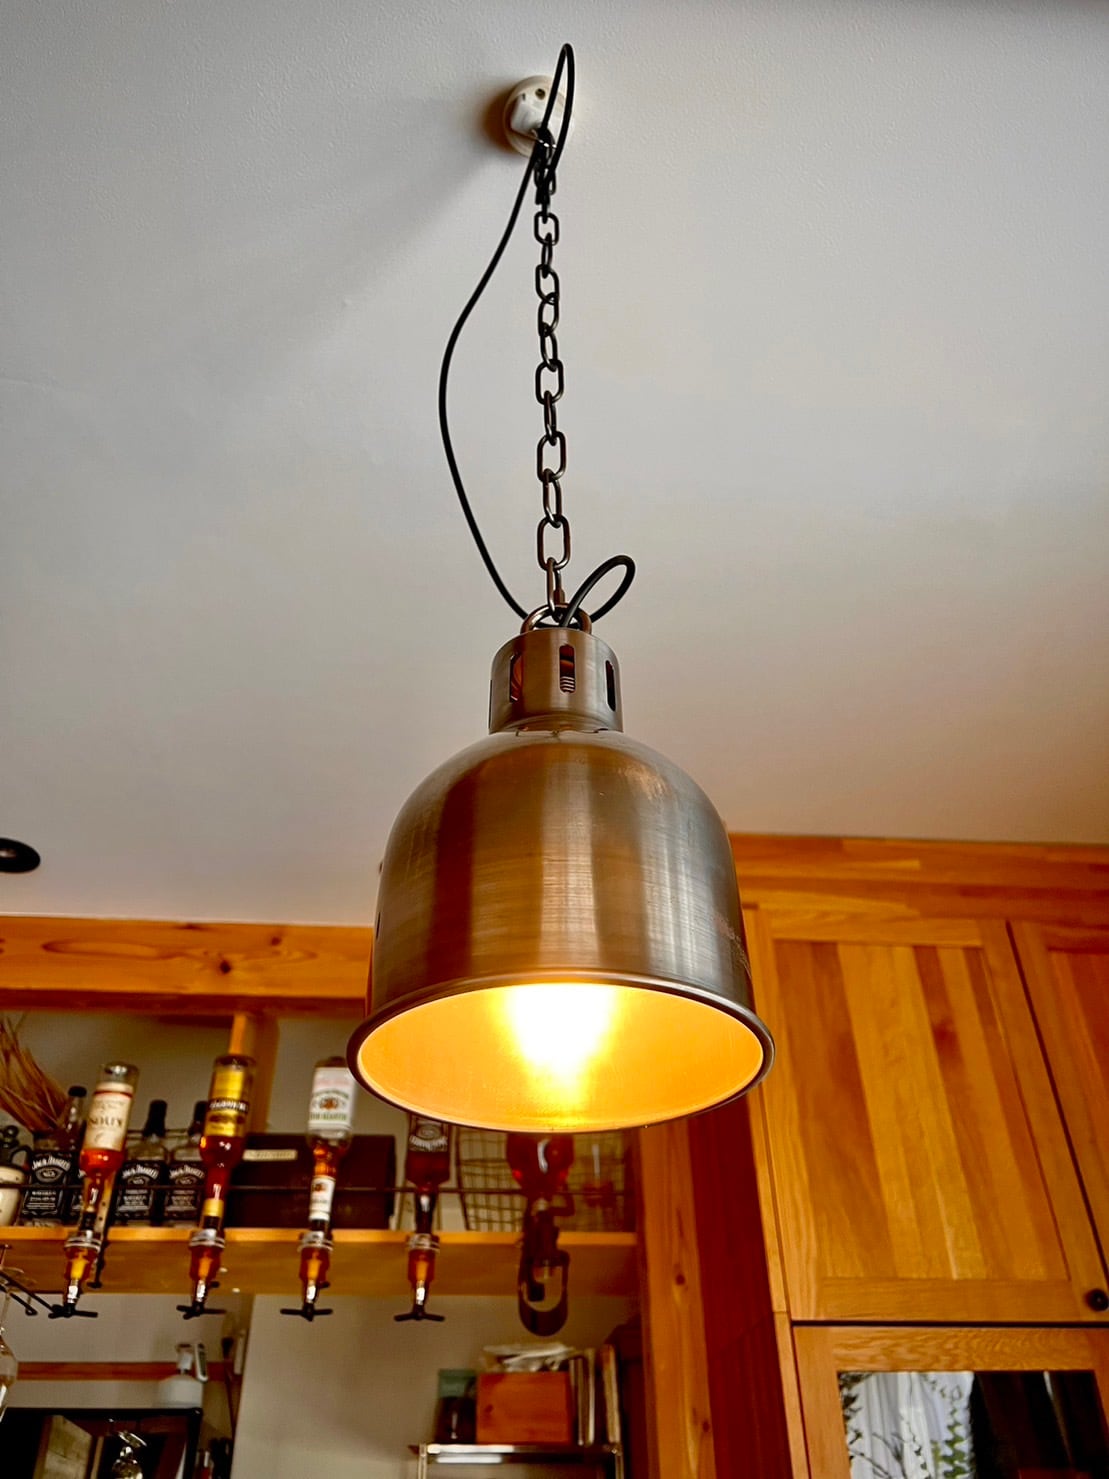 izumiLamp アイアン製のチェーン吊りペンダントライト | izumi Lamp